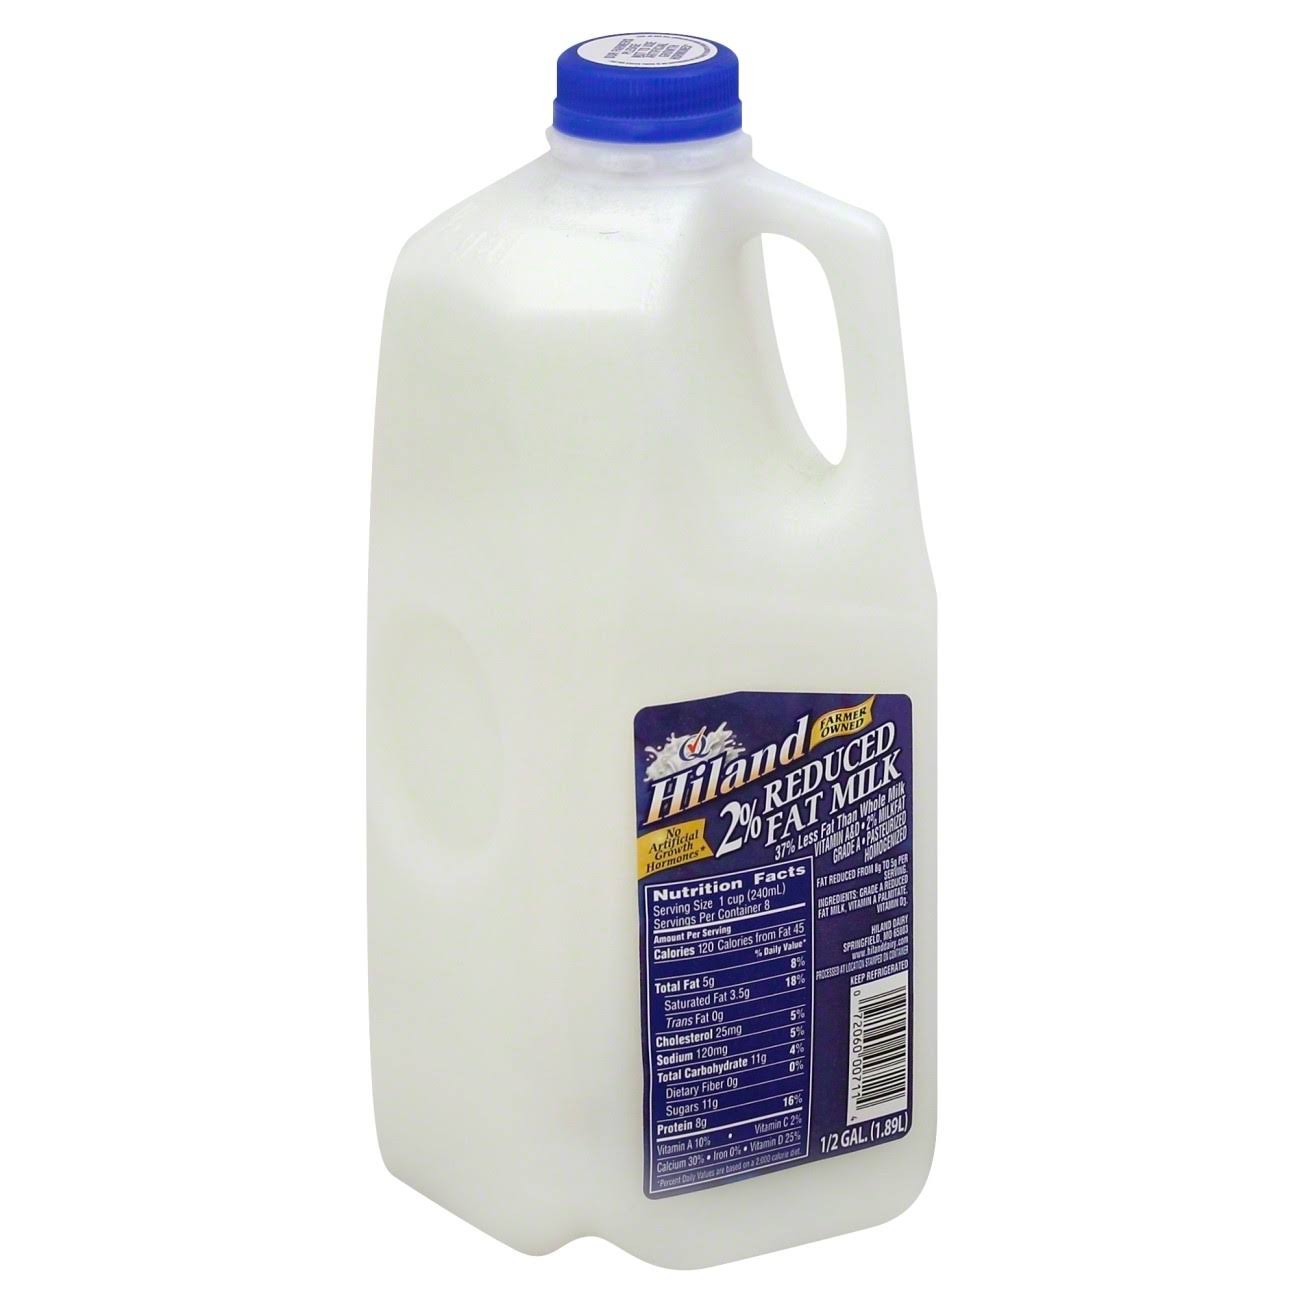 Hiland Milk, Reduced Fat, 2% Fat Milk - 0.5 gal (1.89 l)